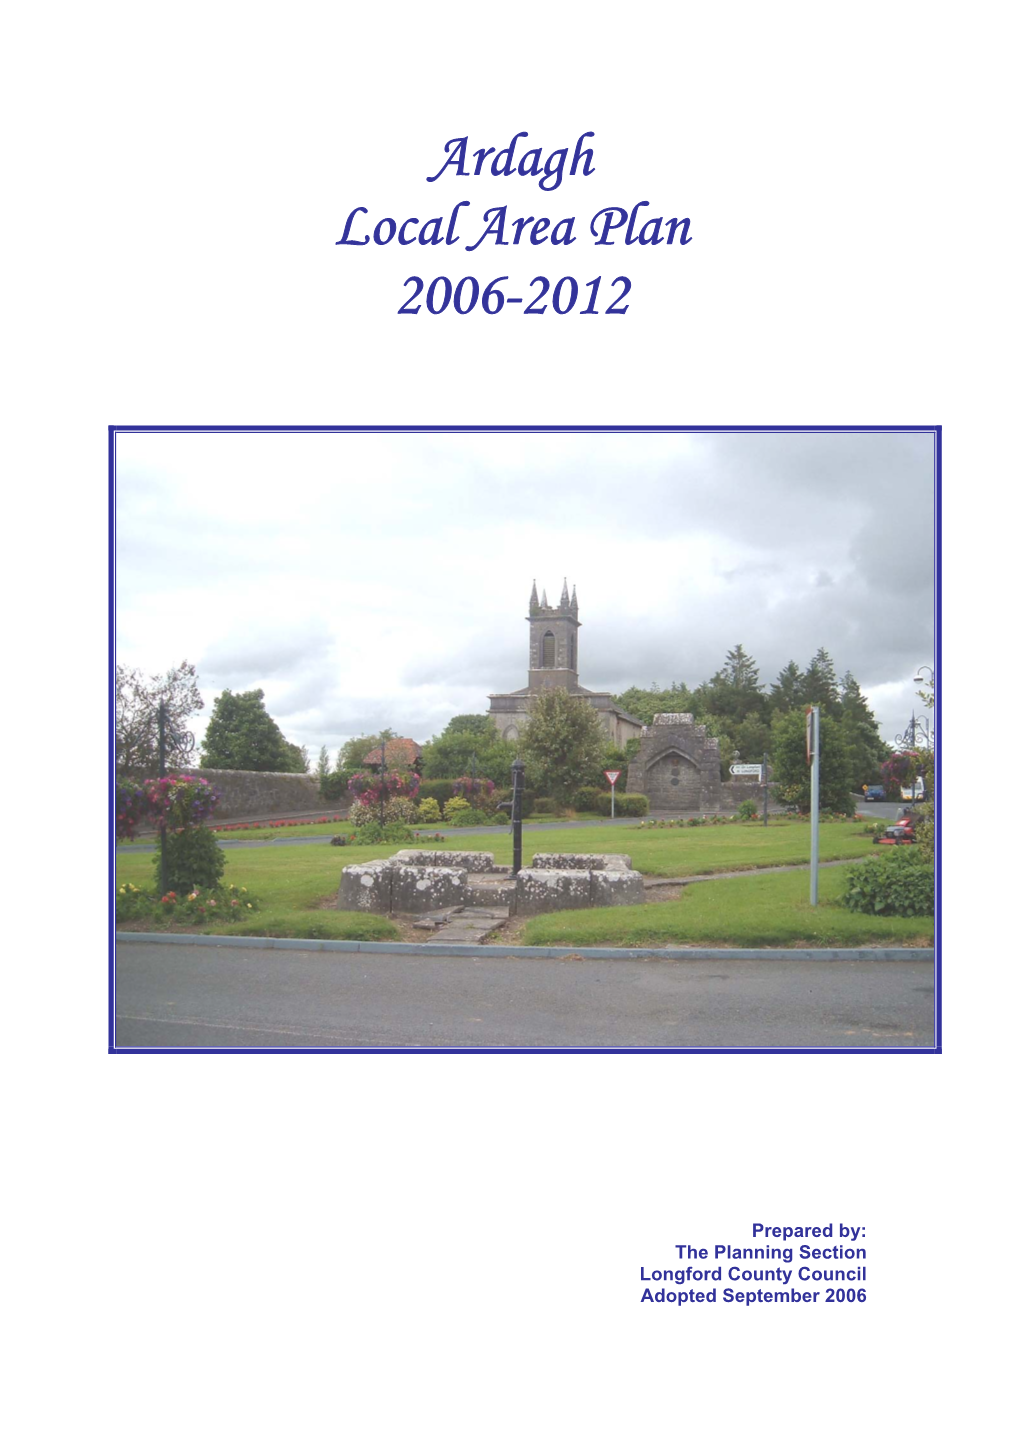 Ardagh Local Area Plan 2006-2012